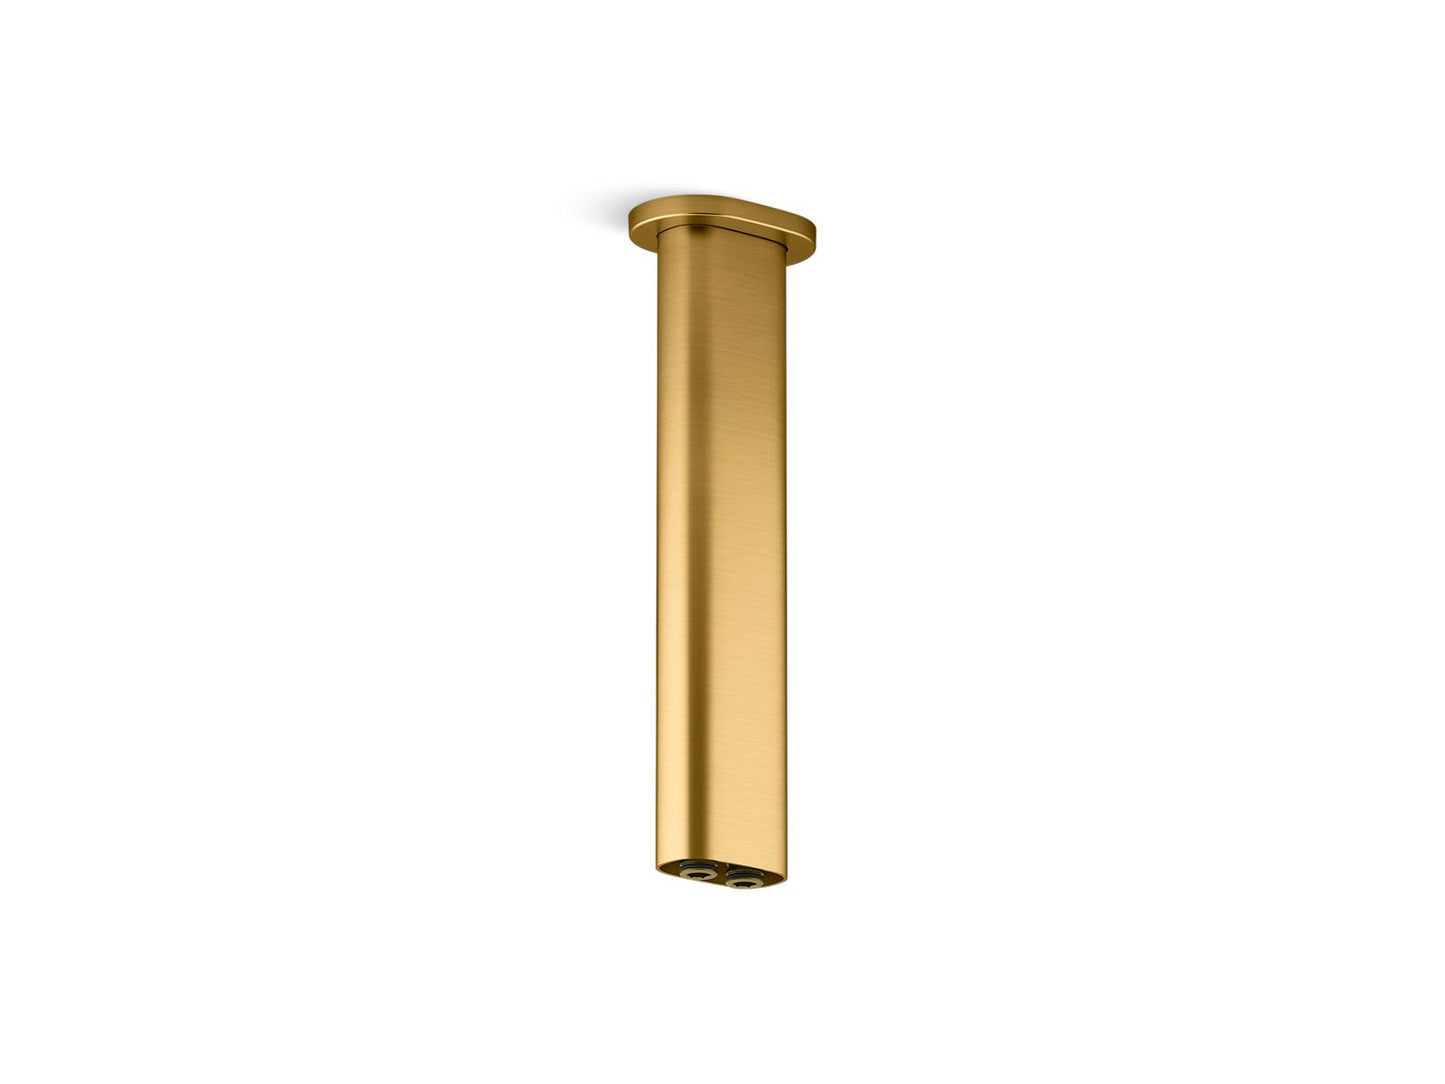 KOHLER K-26326-2MB Statement 10" Ceiling-Mount Two-Function Rainhead Arm And Flange In Vibrant Brushed Moderne Brass